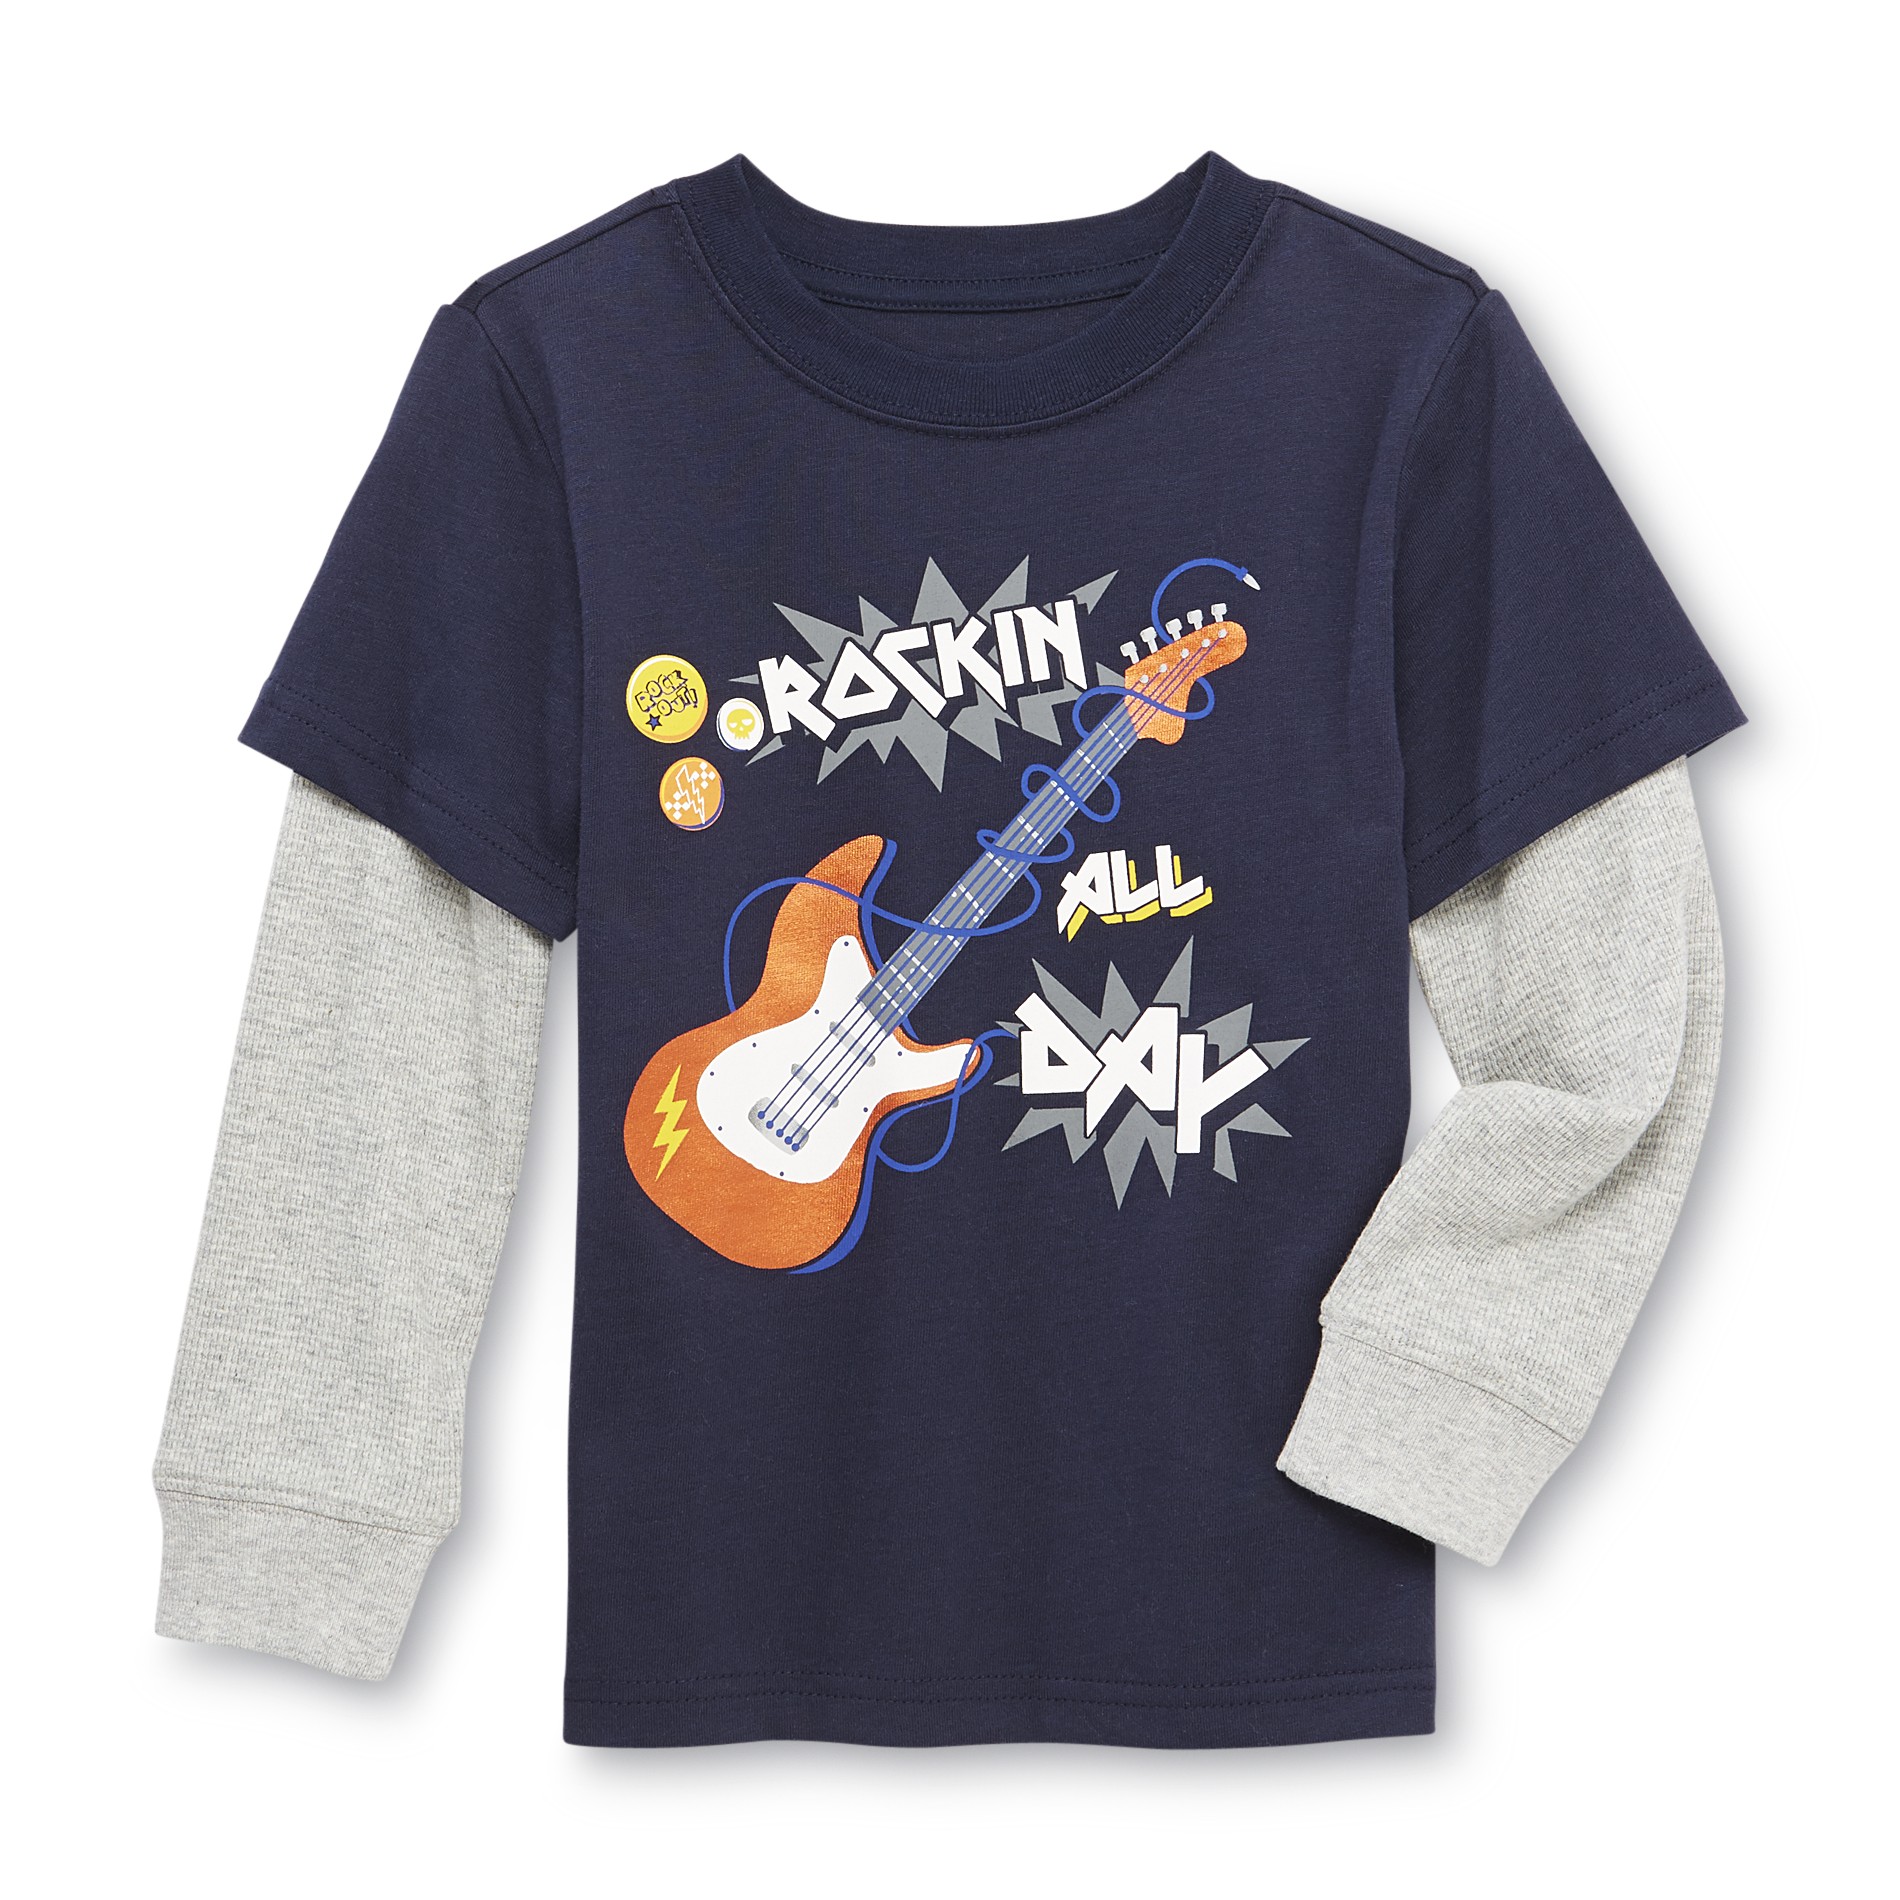 Toughskins Boy's Graphic T-Shirt - Rockin All Day